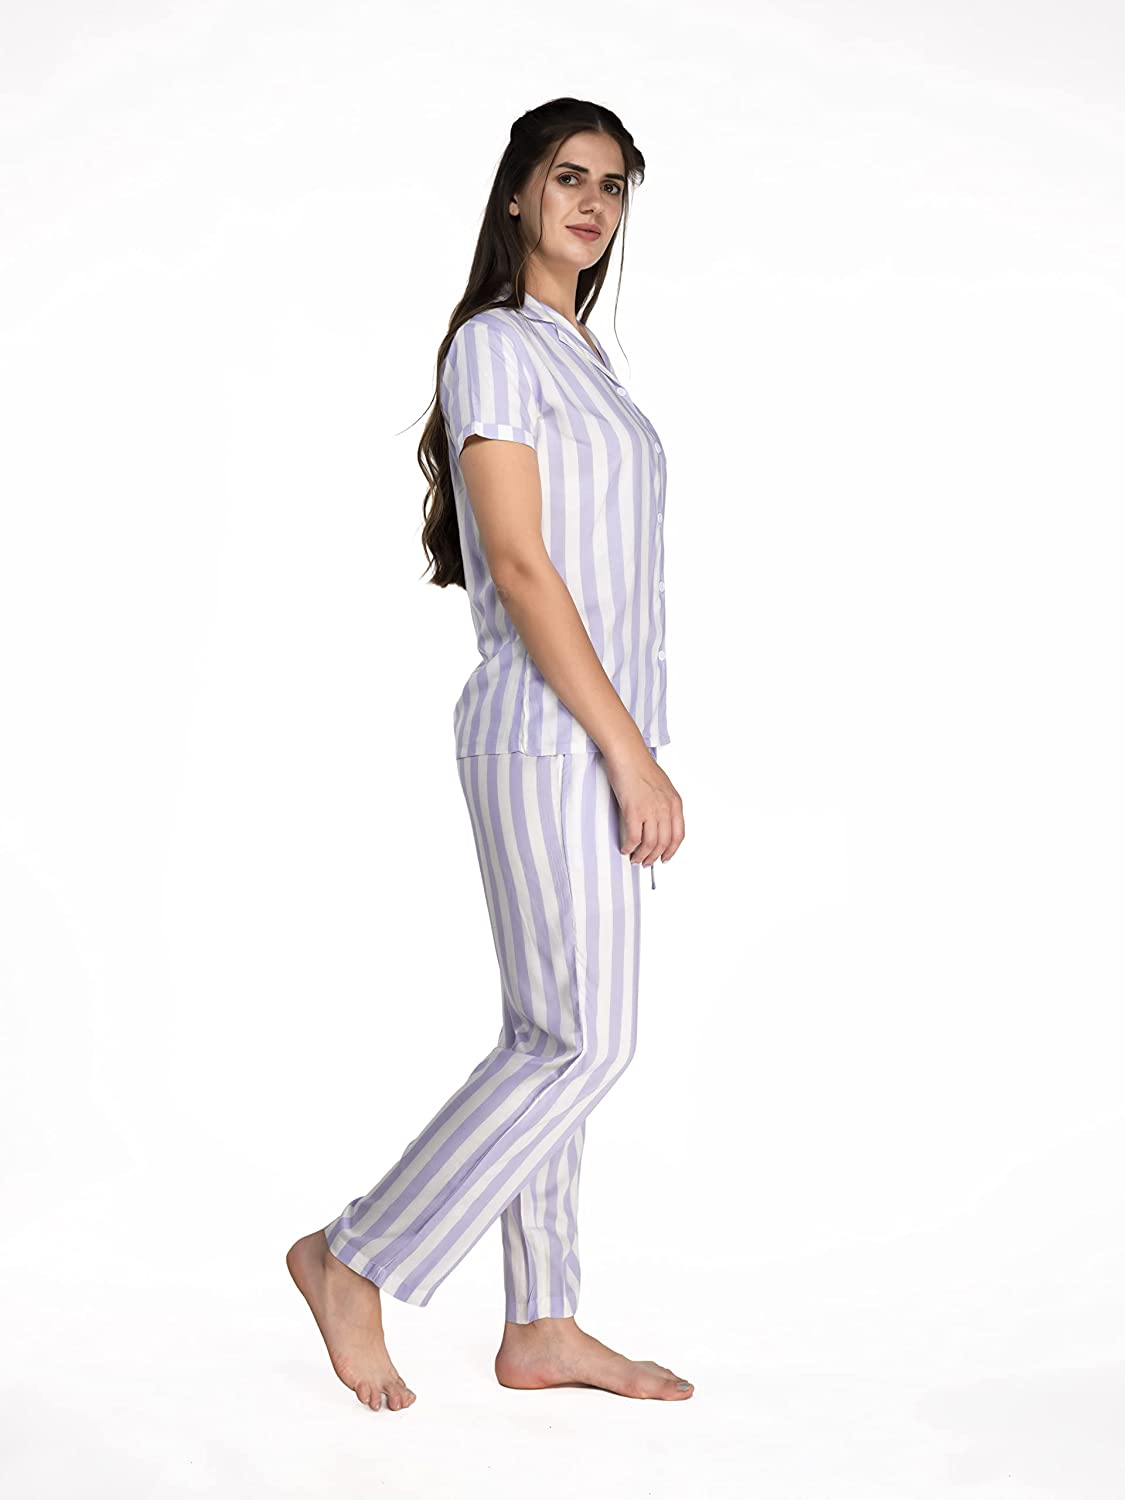 Evolove Women Pyjama & Top Set with Pockets Night Wear Daily Use Viscose Liva Printed Dress Suit Sleep & Lounge Wear (S to 2XL Size)